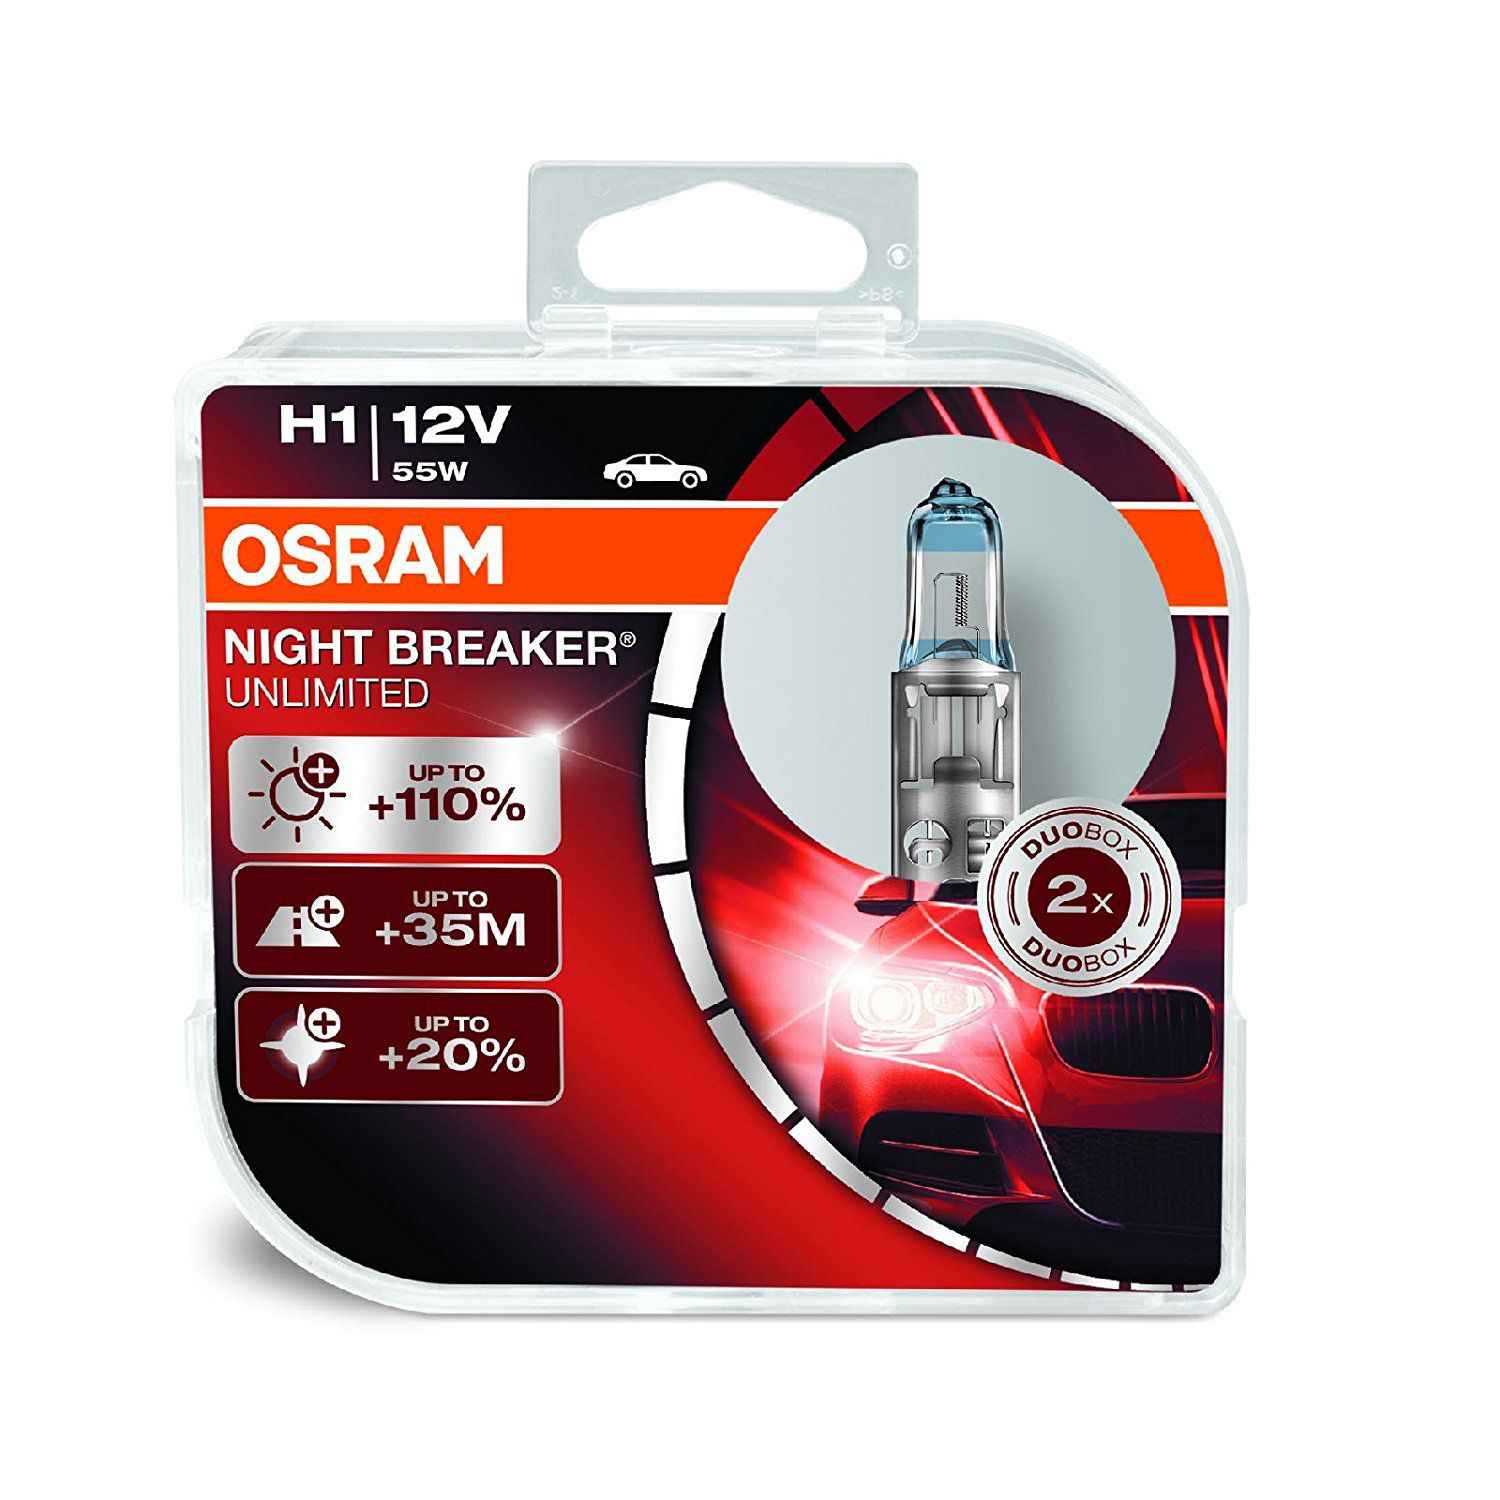 Buy Osram H1 P64150 Night Breaker Unlimited Duo Box (12V, 55W